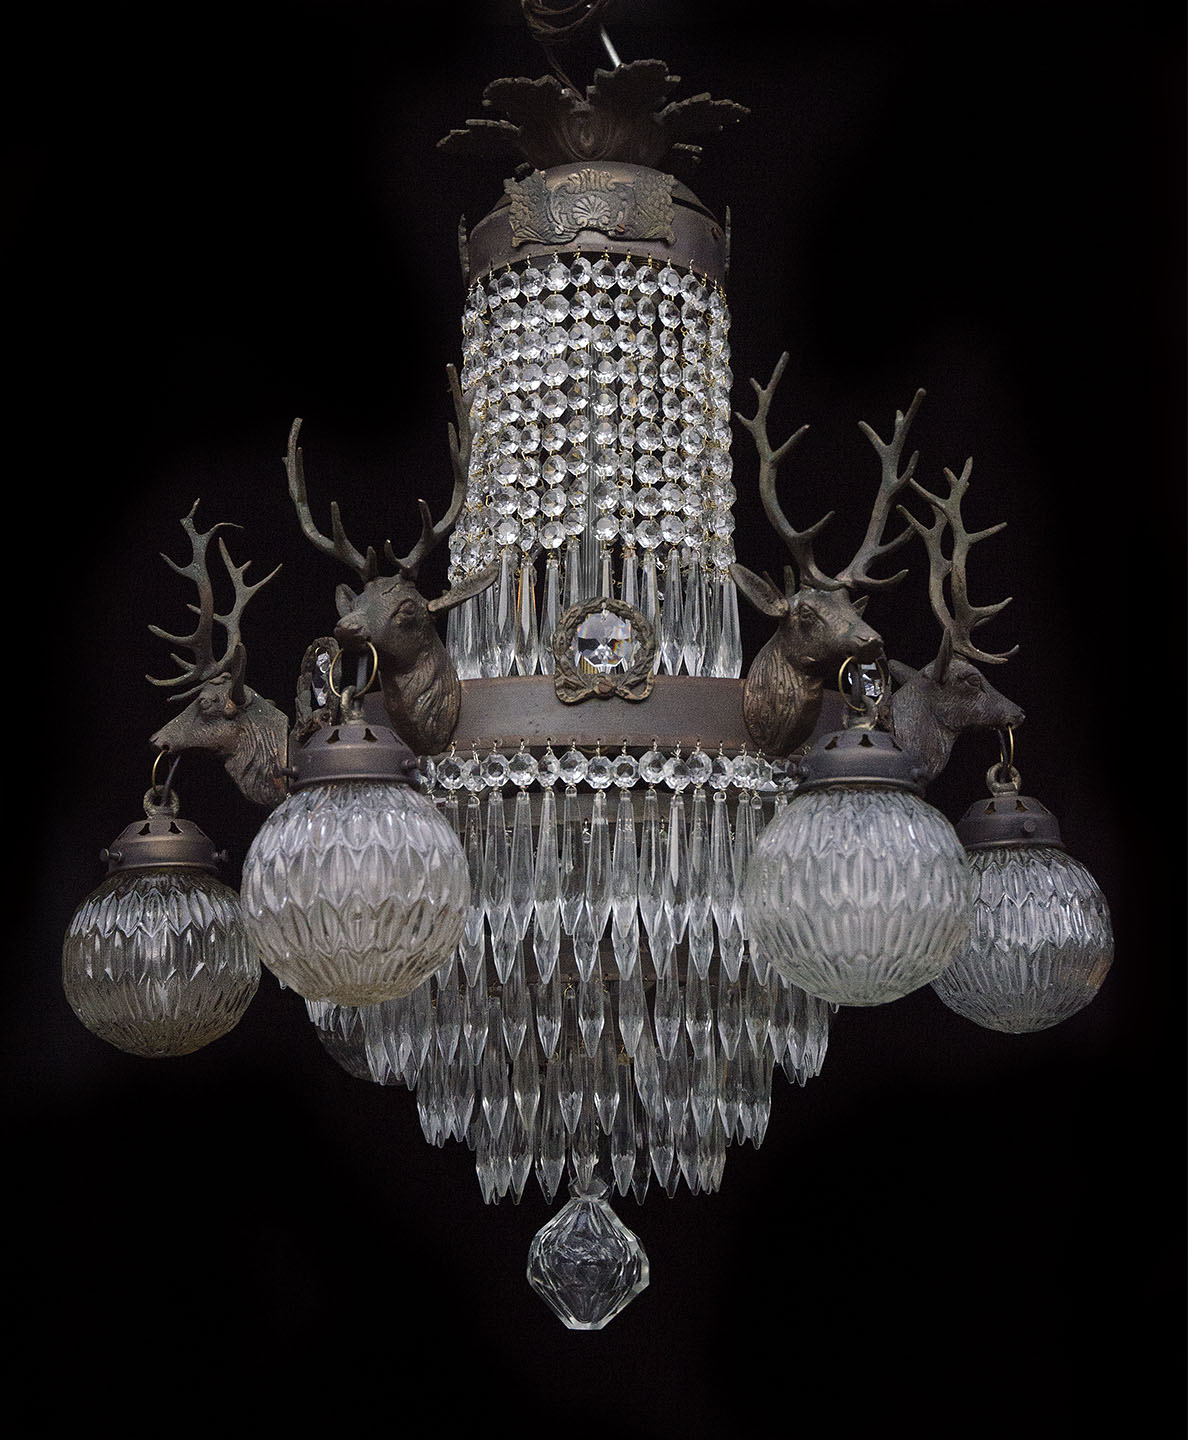 Vintage Wonderland Chandeliers 1930s Belgian stag head chandelier